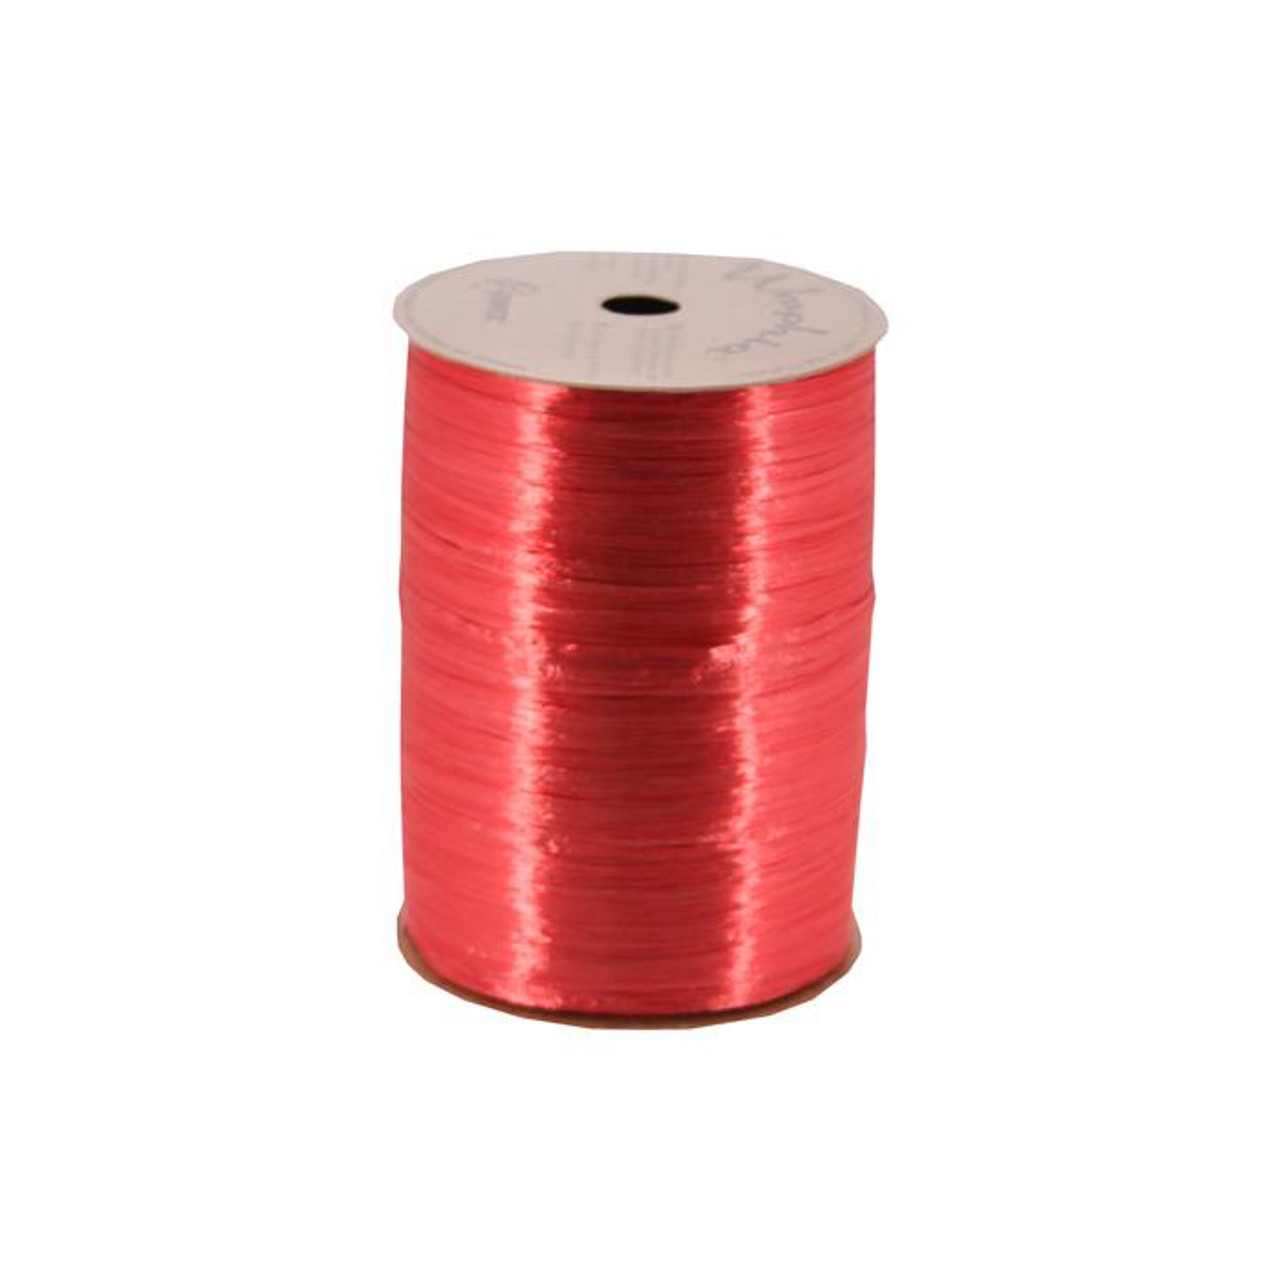 Berwick Imperial Red Pearlized Wraphia Ribbon 100 yds/spool